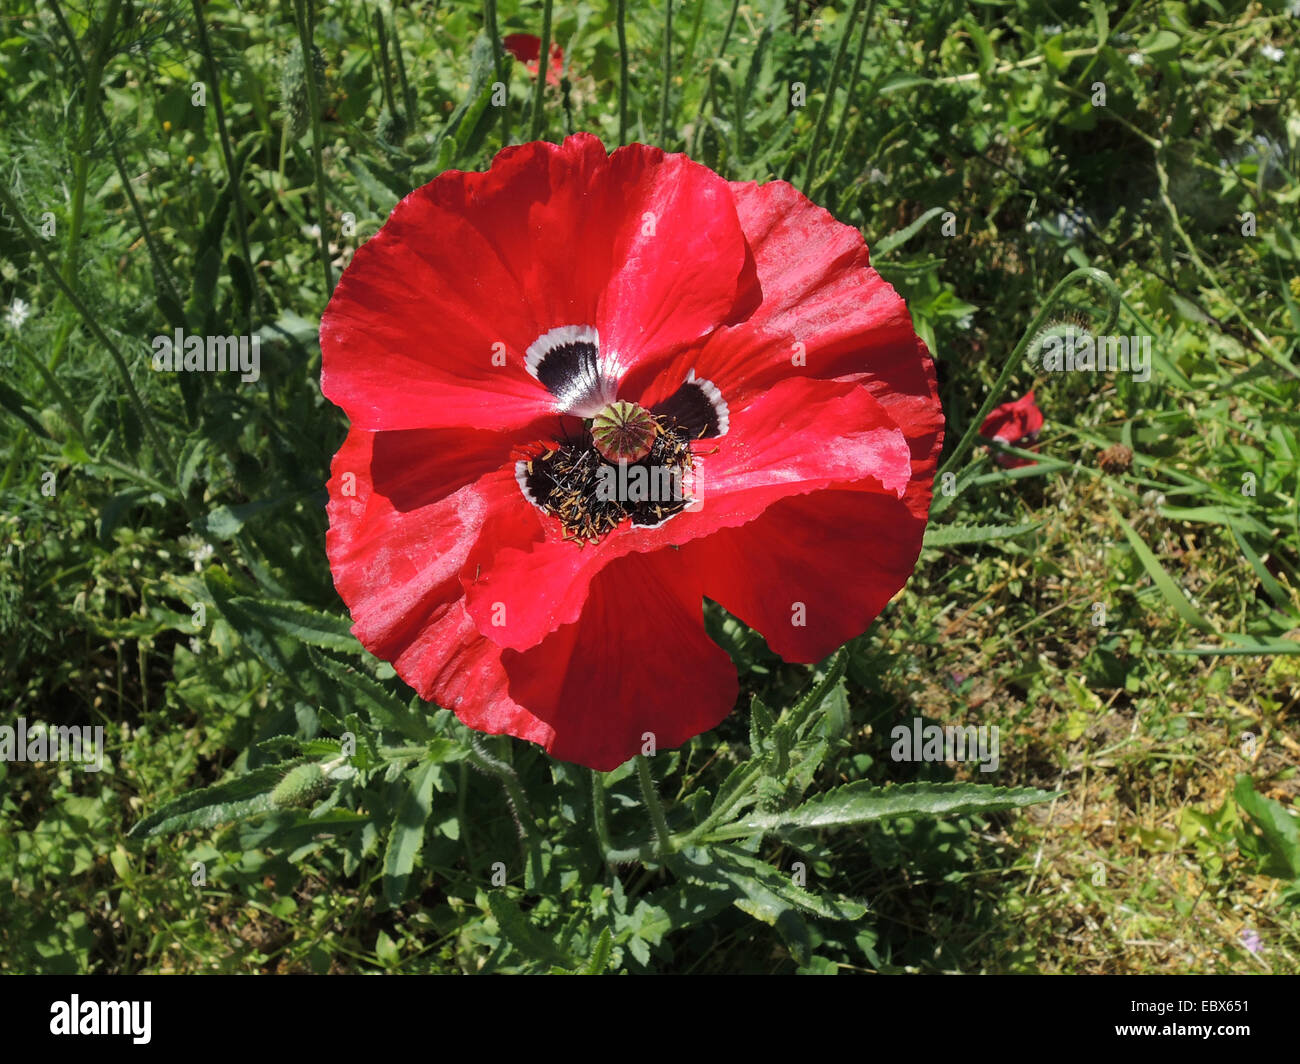 Common poppy, Corn poppy, Red poppy (Papaver rhoeas), flower with black and white spot, Germany Stock Photo